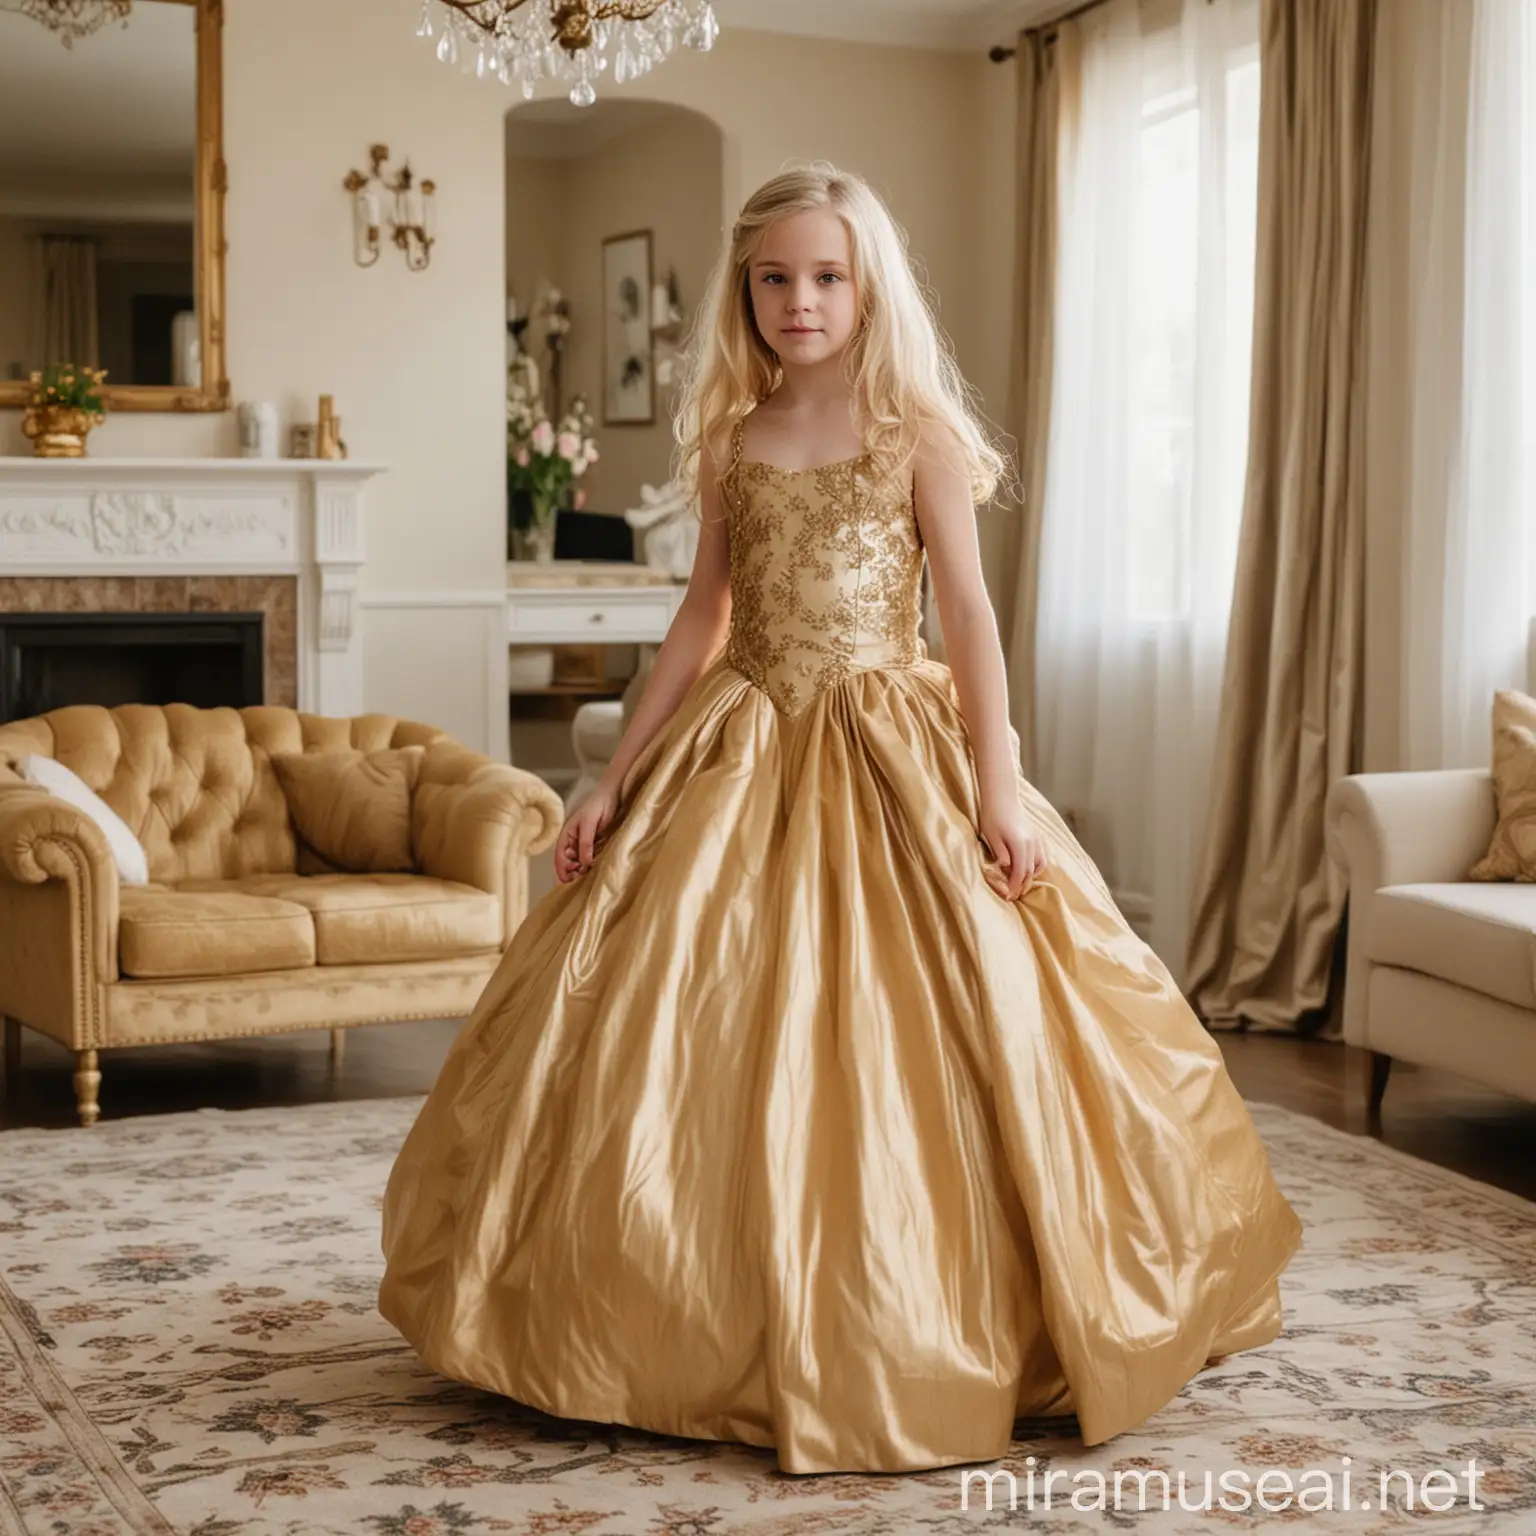 Young Girl in Golden Ball Gown Standing in Elegant Living Room